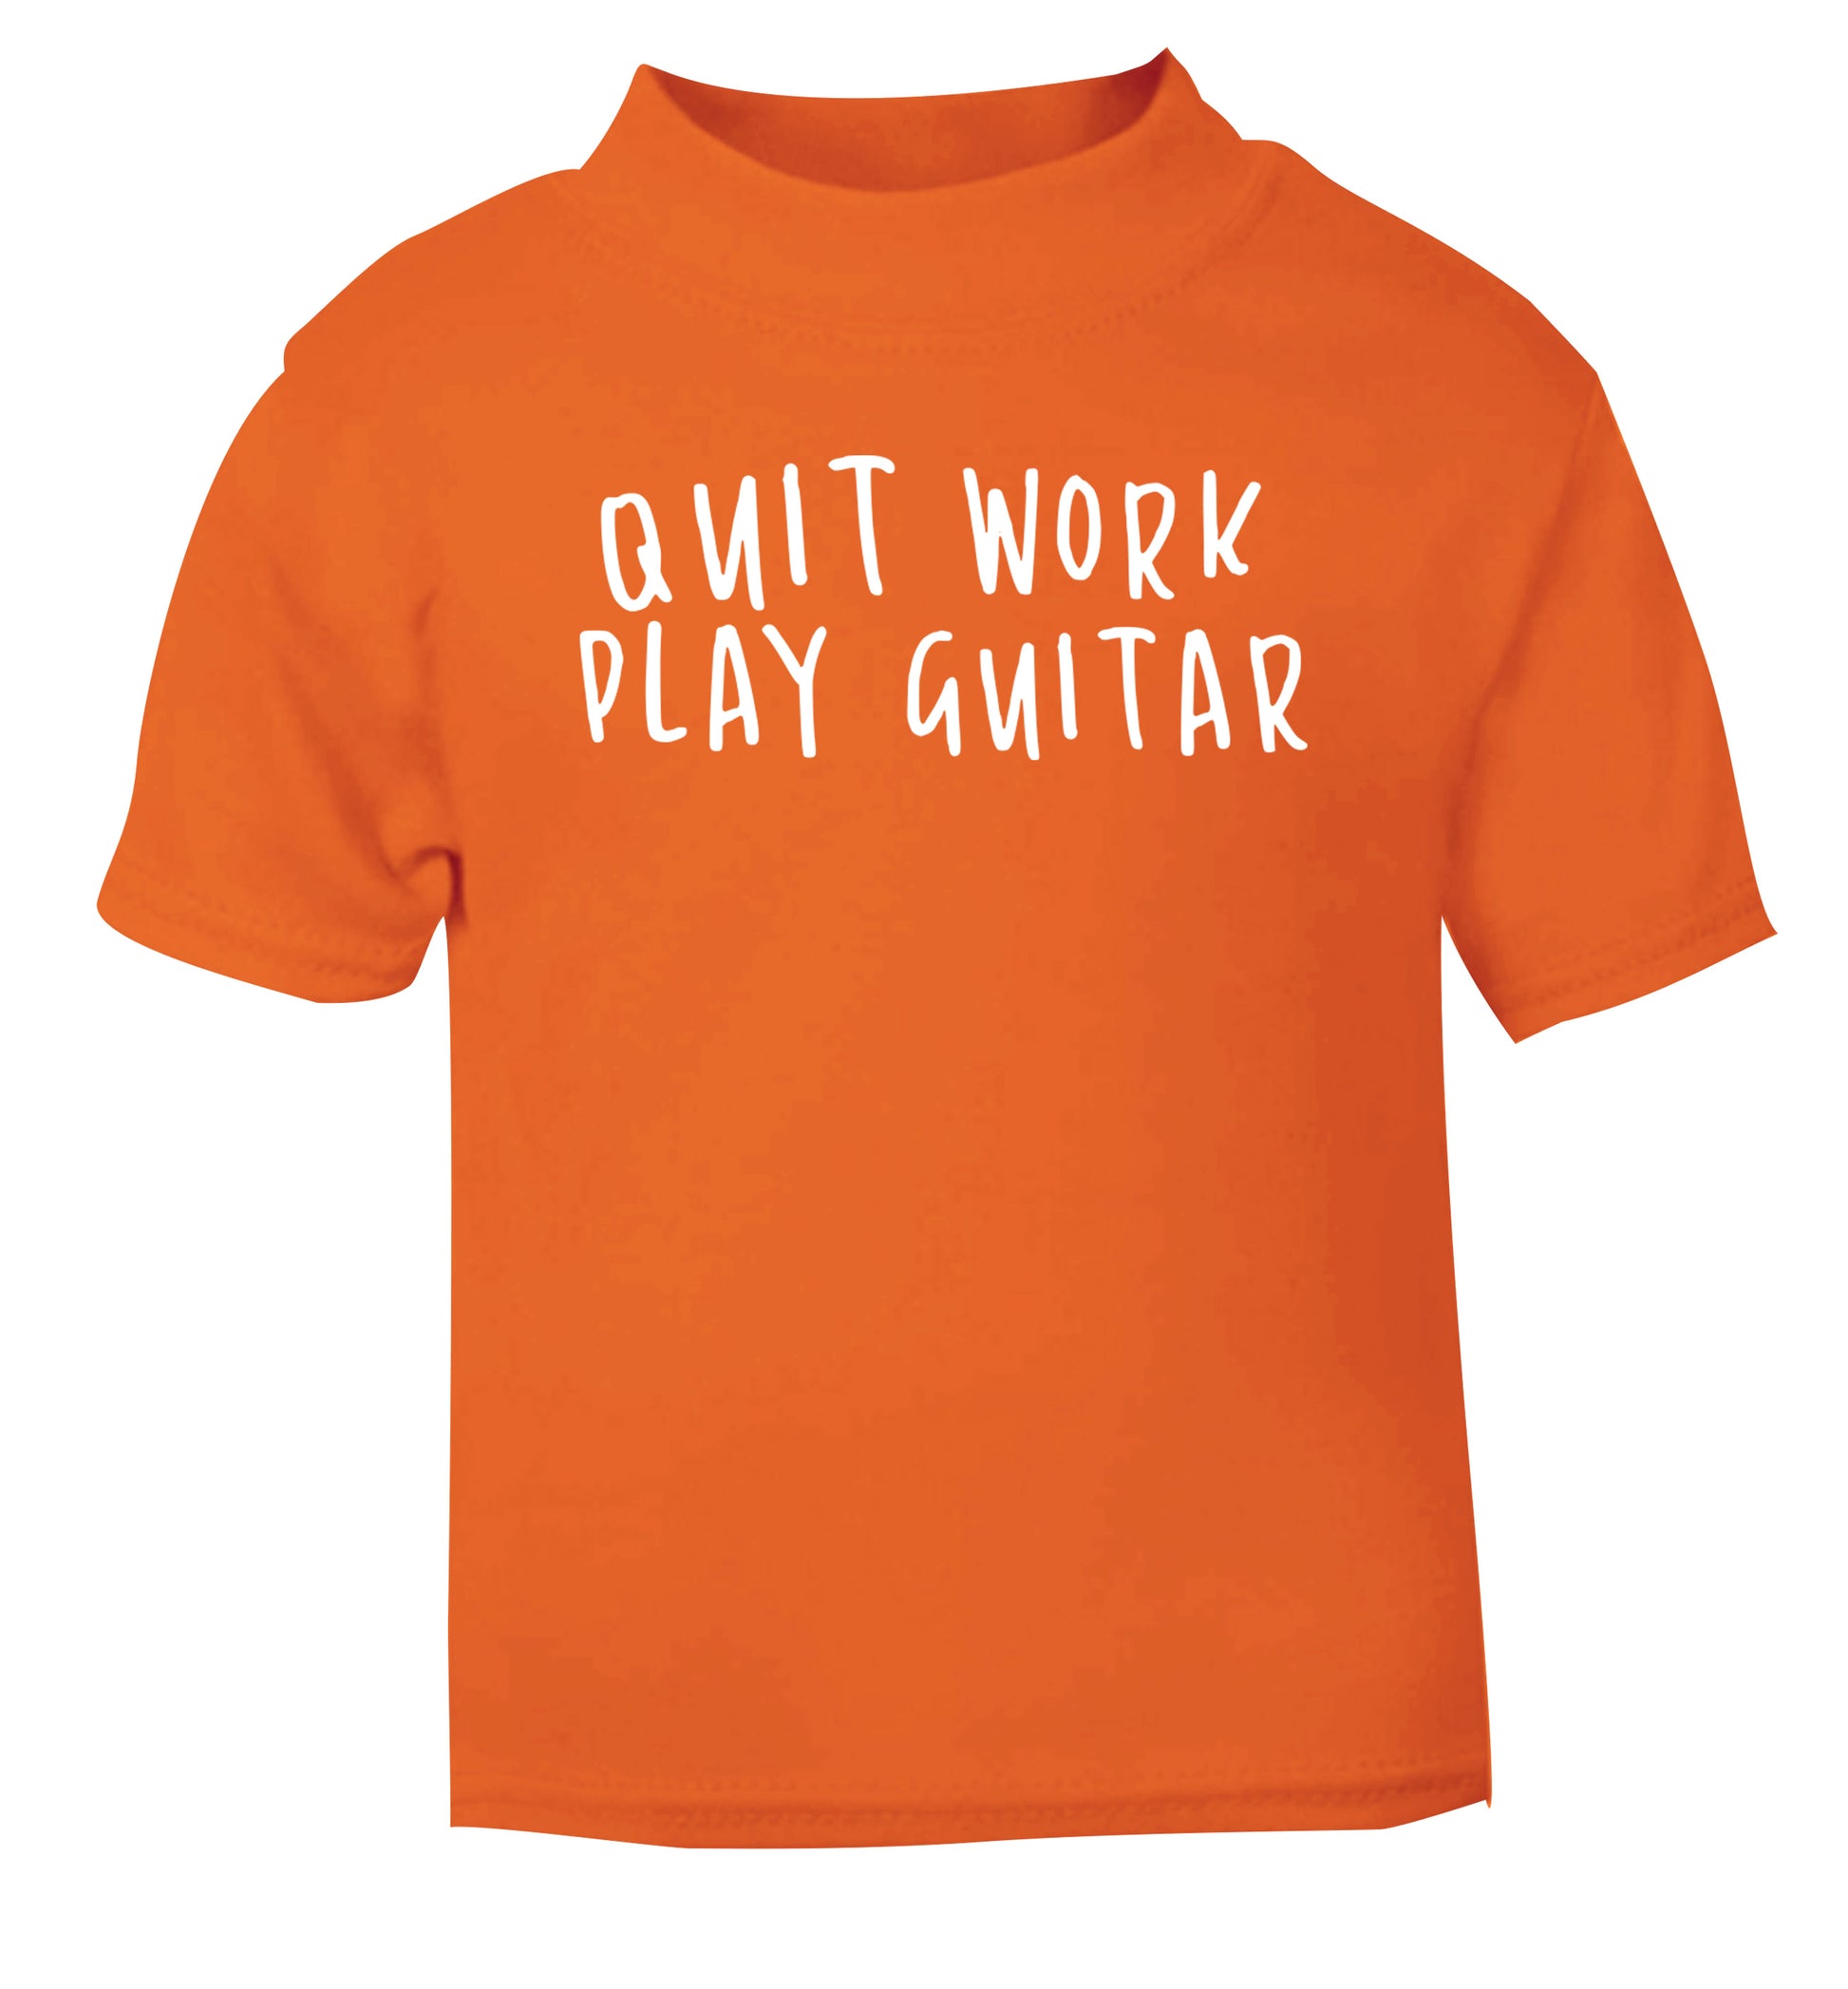 Quit work play guitar orange Baby Toddler Tshirt 2 Years